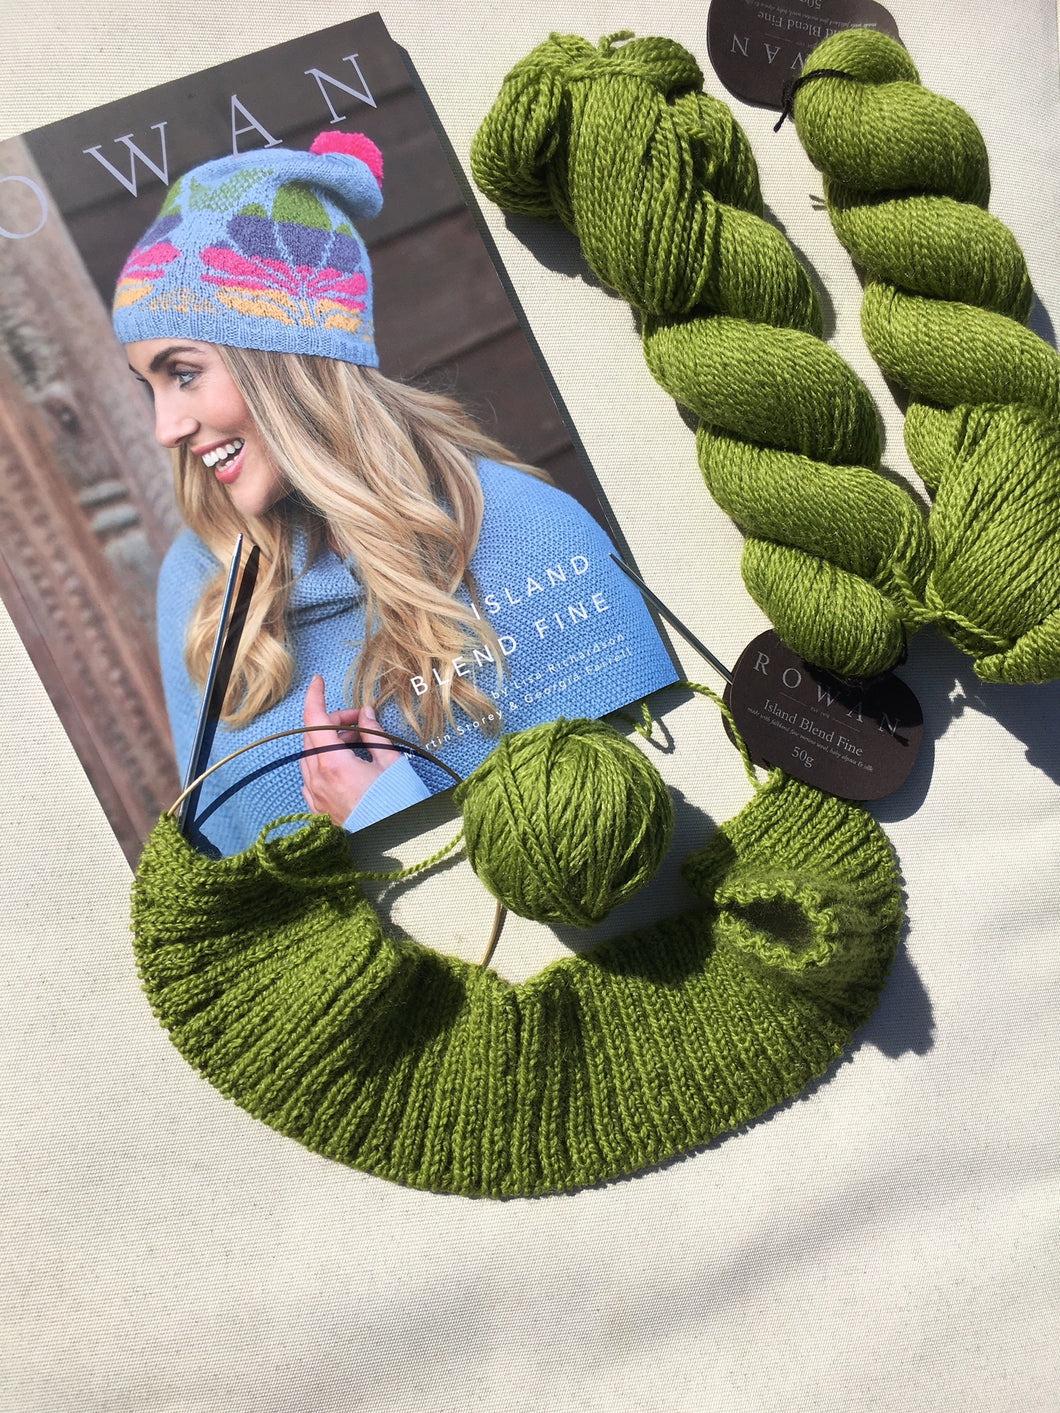 Autumn/Winter Knit A Successful Garment Knit Along